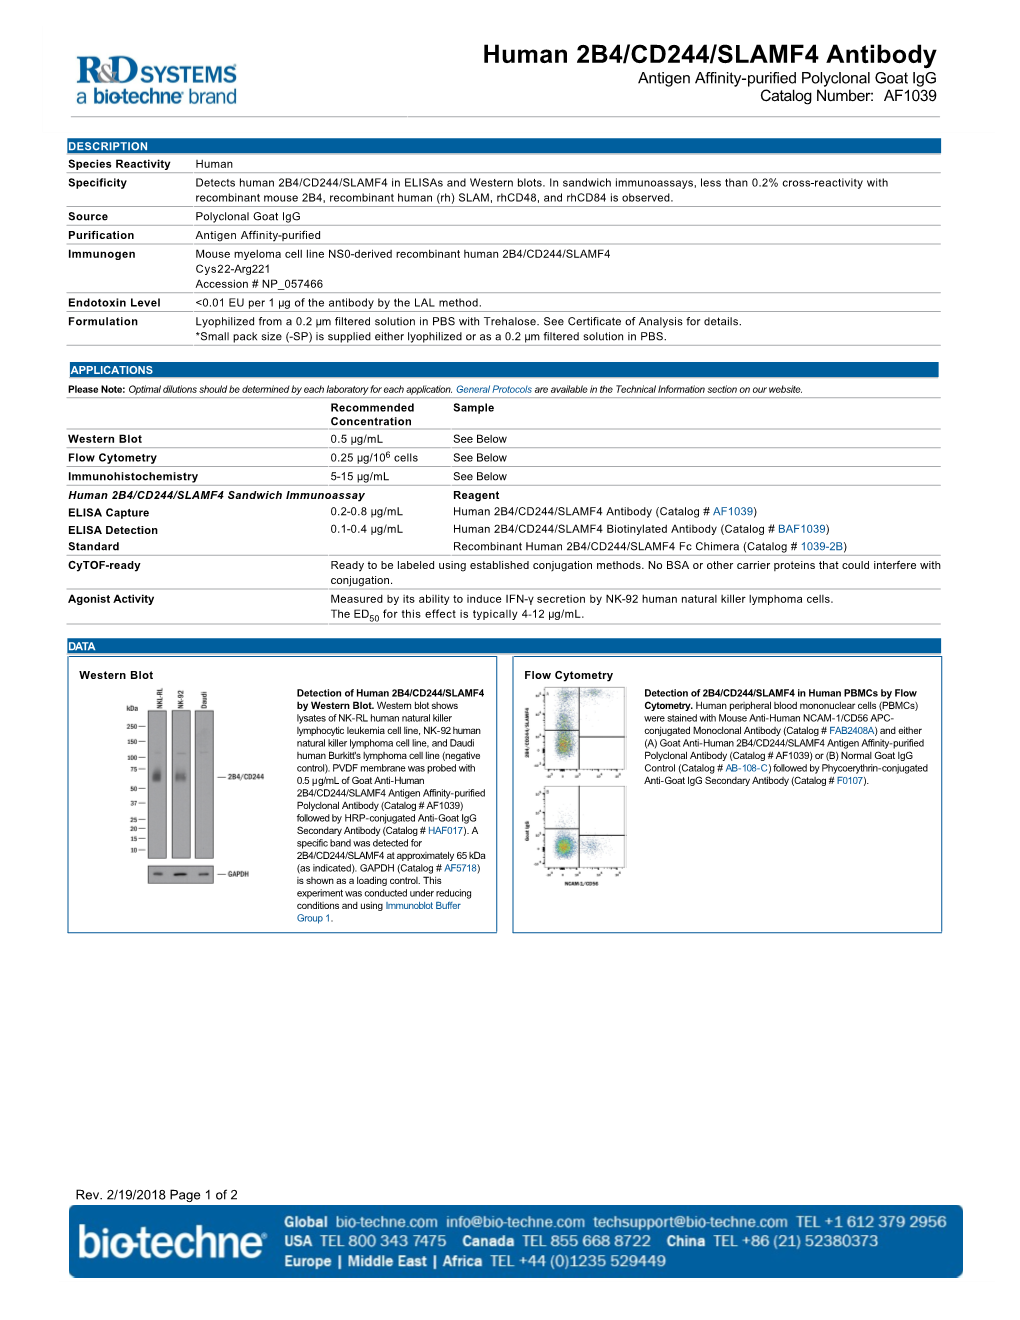 Human 2B4/CD244/SLAMF4 Antibody Antigen Affinity-Purified Polyclonal Goat Igg Catalog Number: AF1039